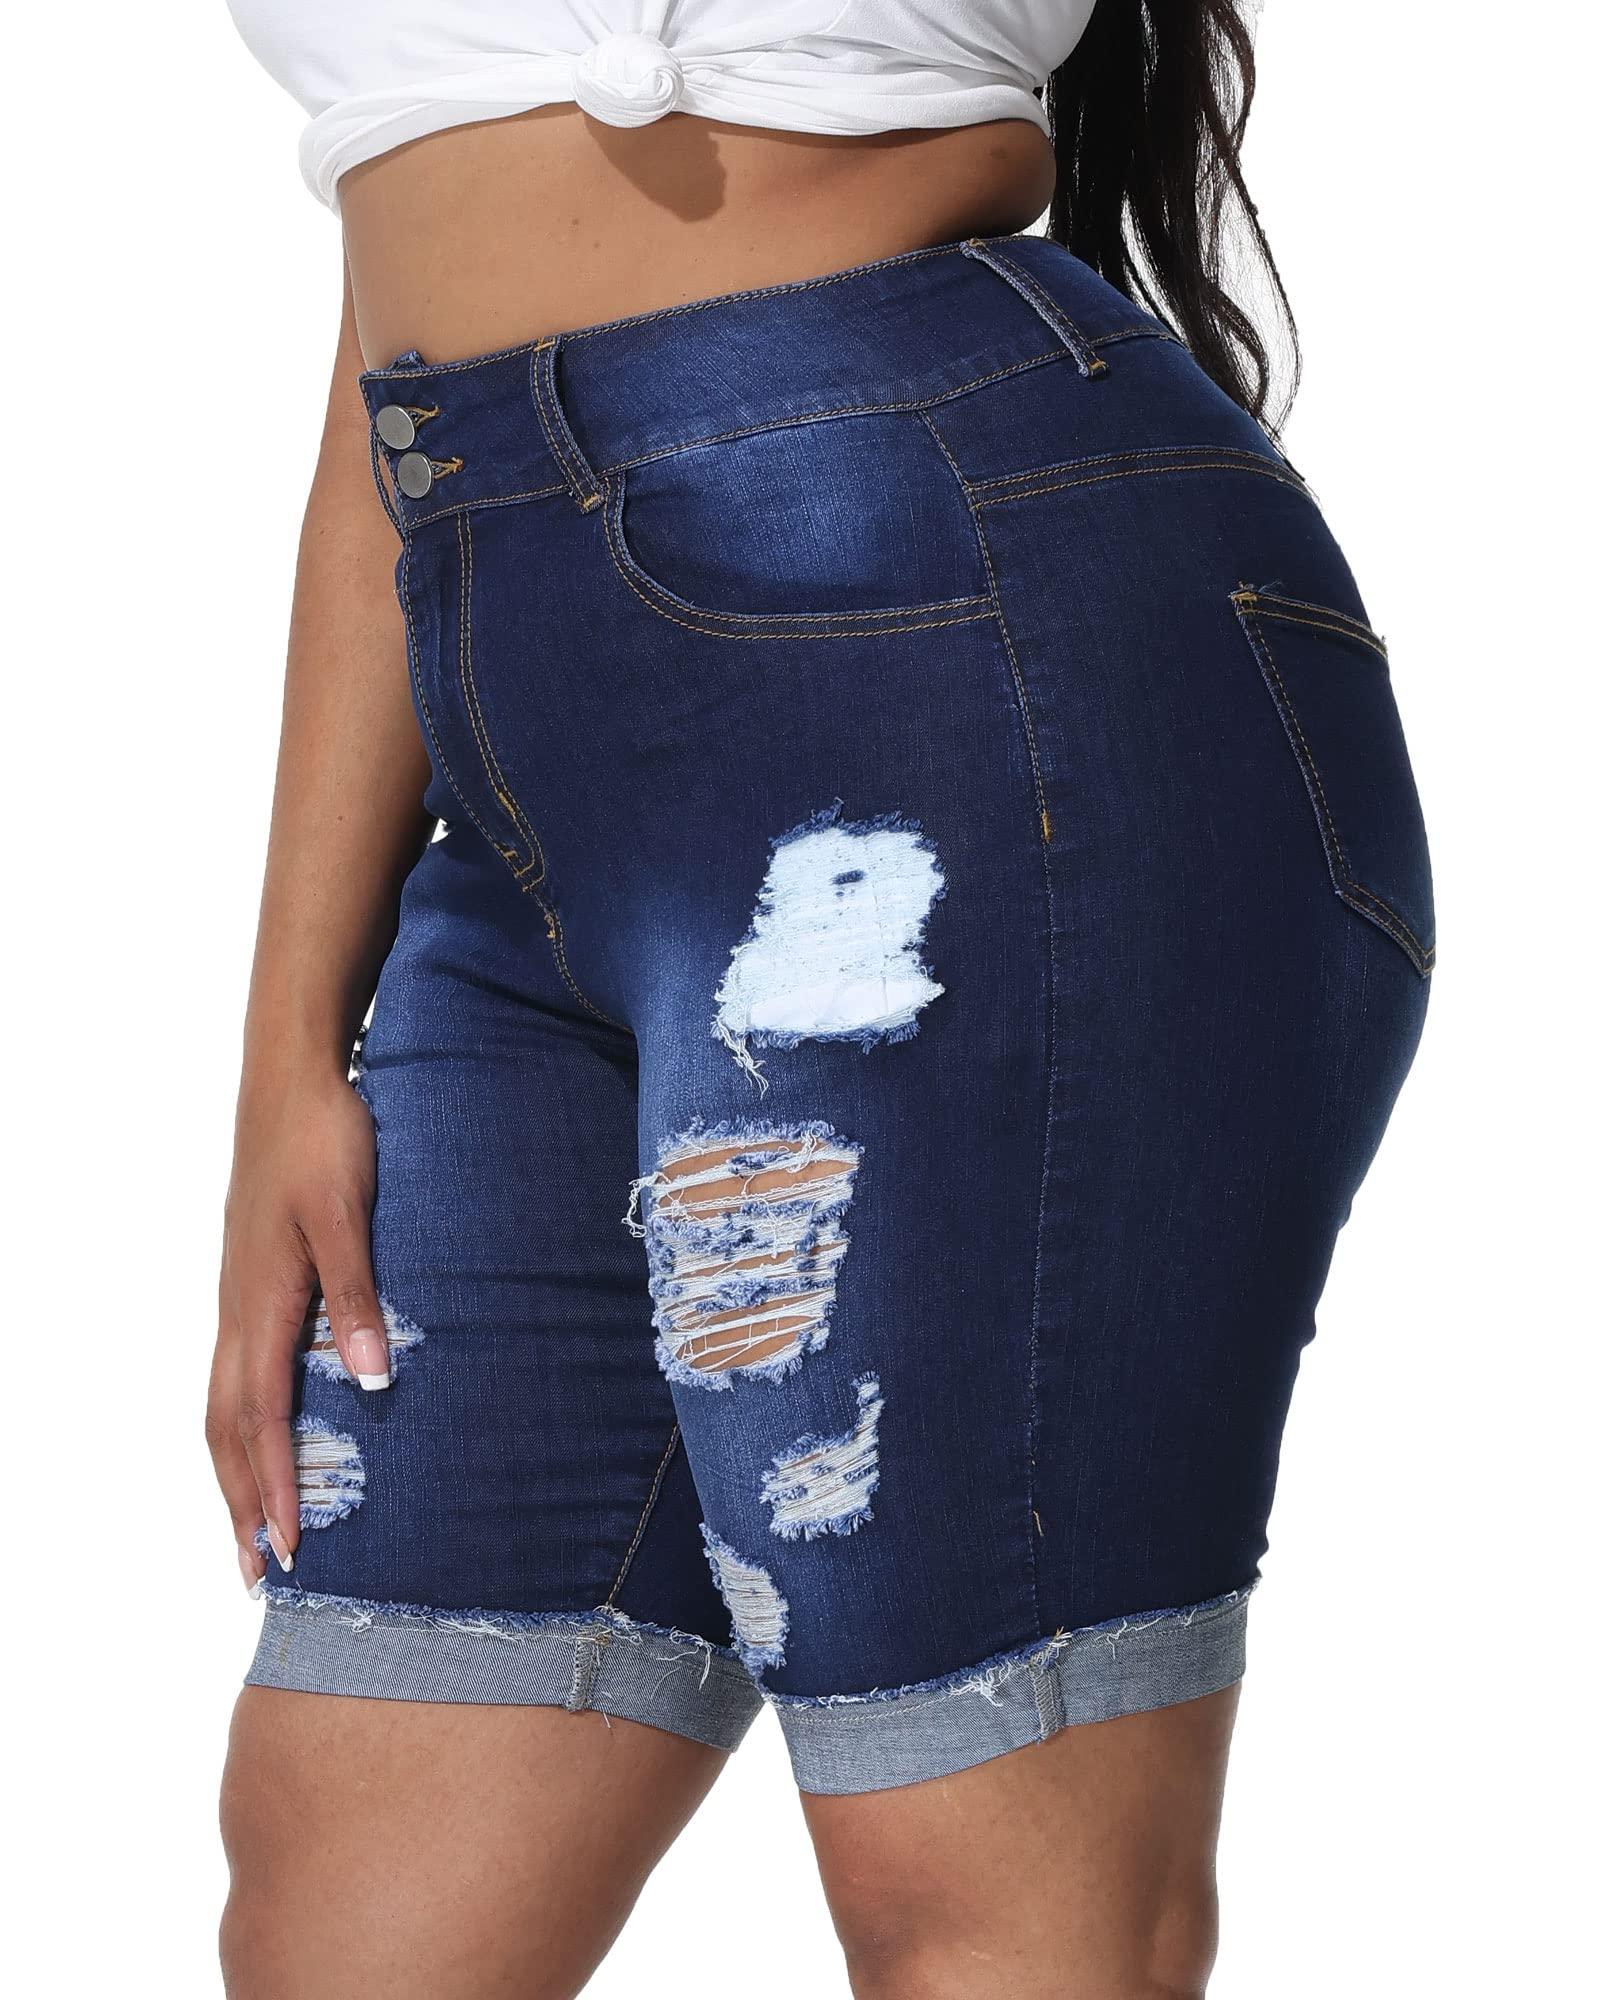 Gboomo Jean Shorts for Women Plus Size High Waisted Bermuda Denim Shorts Distressed Rolled Hem Short Jeans Dark Blue 20W - Bona Fide Fashion